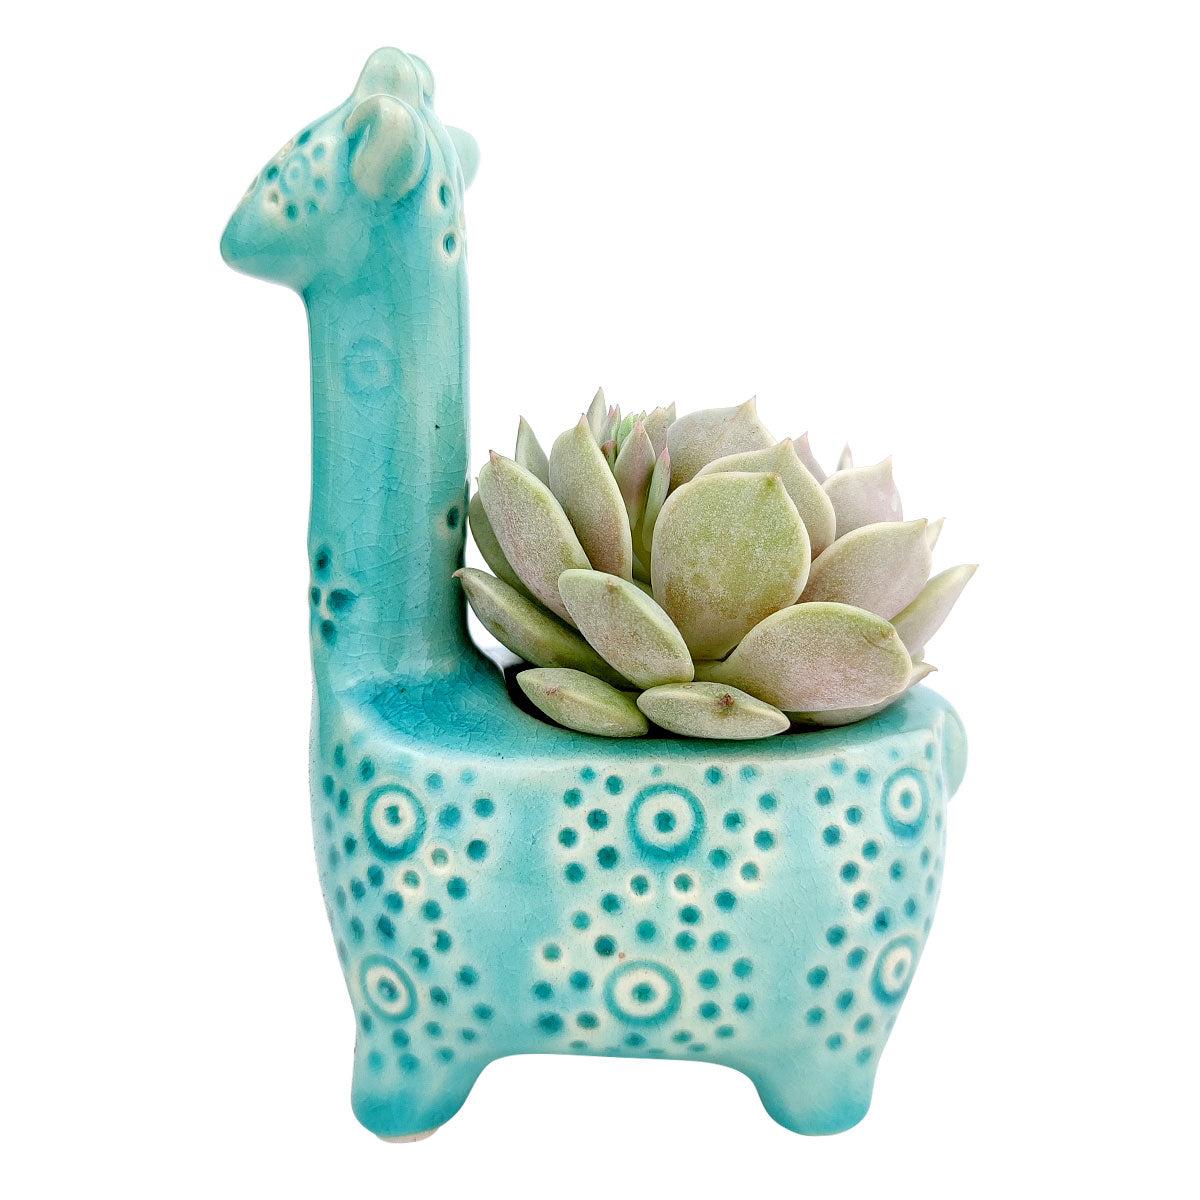 Blue Giraffe Ceramic Pot for sale, Ceramic mini pot for succulents and flowers, Ceramic Giraffe Flower Pot, Cute succulent planter, ideal gifts for mom, Giraffe Planters for sale